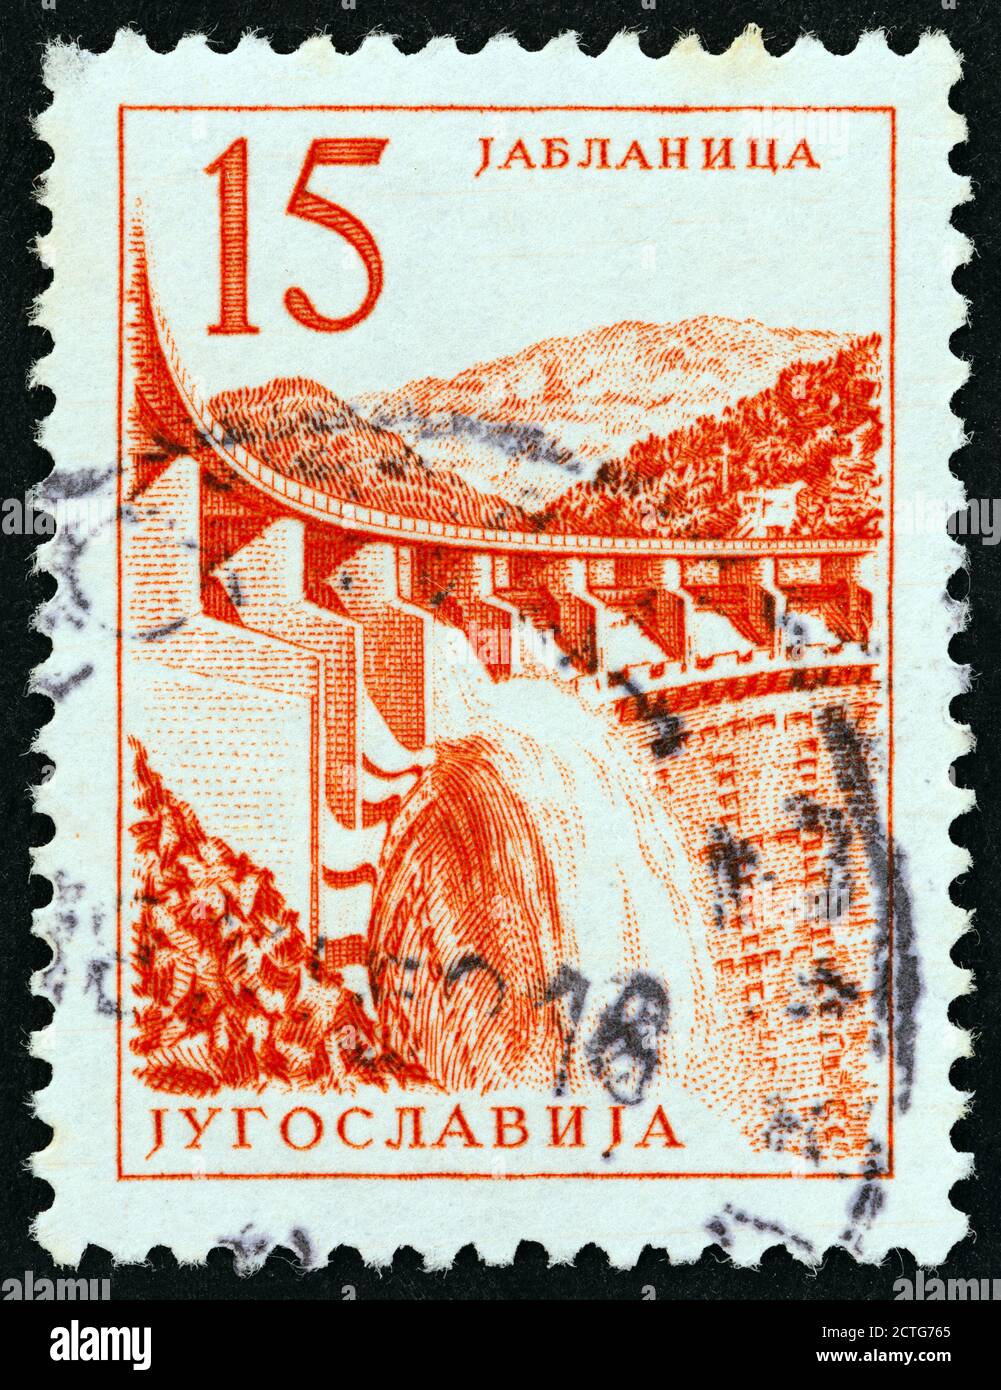 YUGOSLAVIA - CIRCA 1958: A stamp printed in Yugoslavia shows Jablanica Dam, circa 1958. Stock Photo